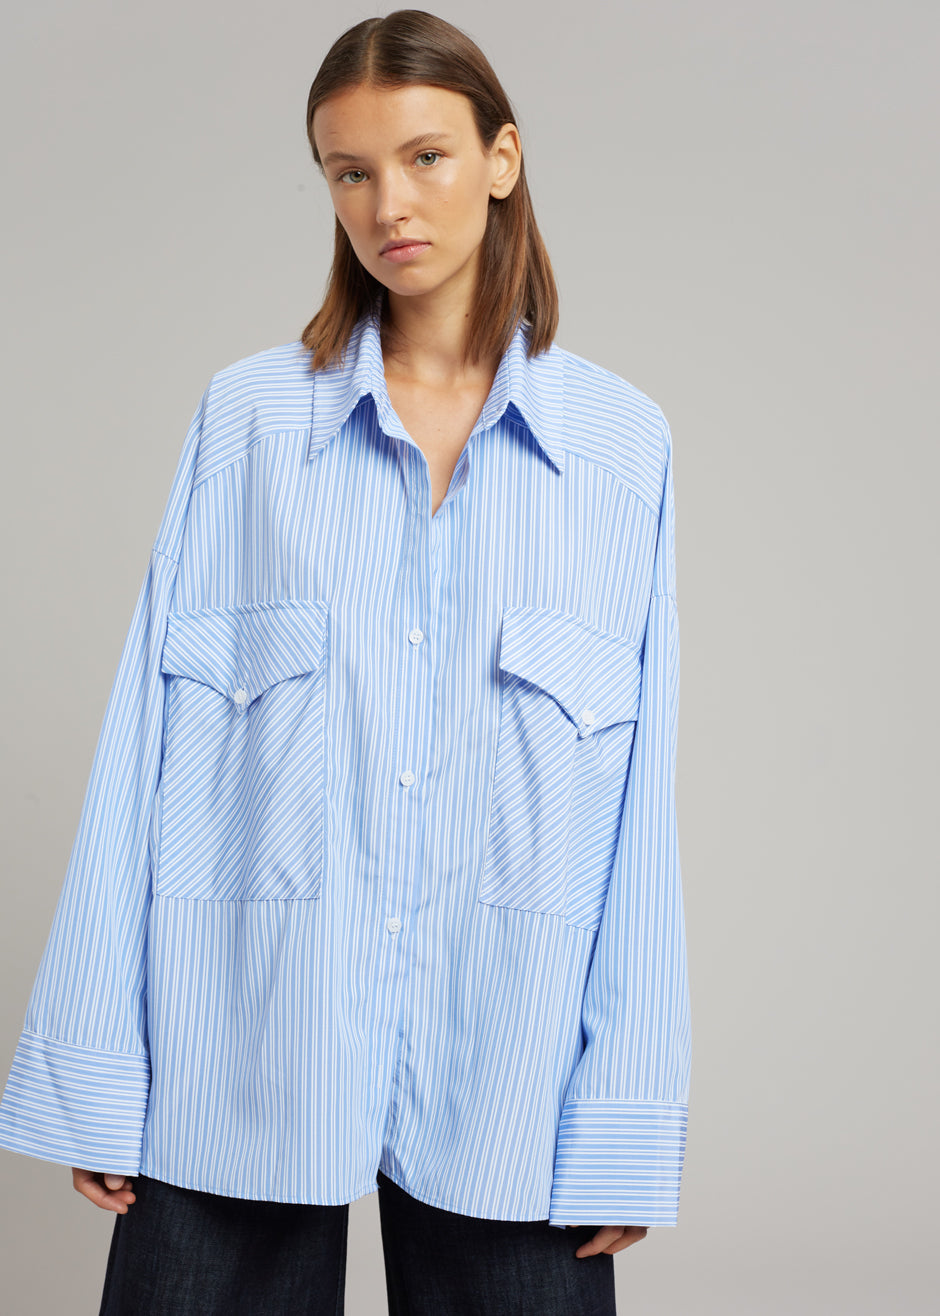 Orson Pocket Shirt - Blue Stripe - 6